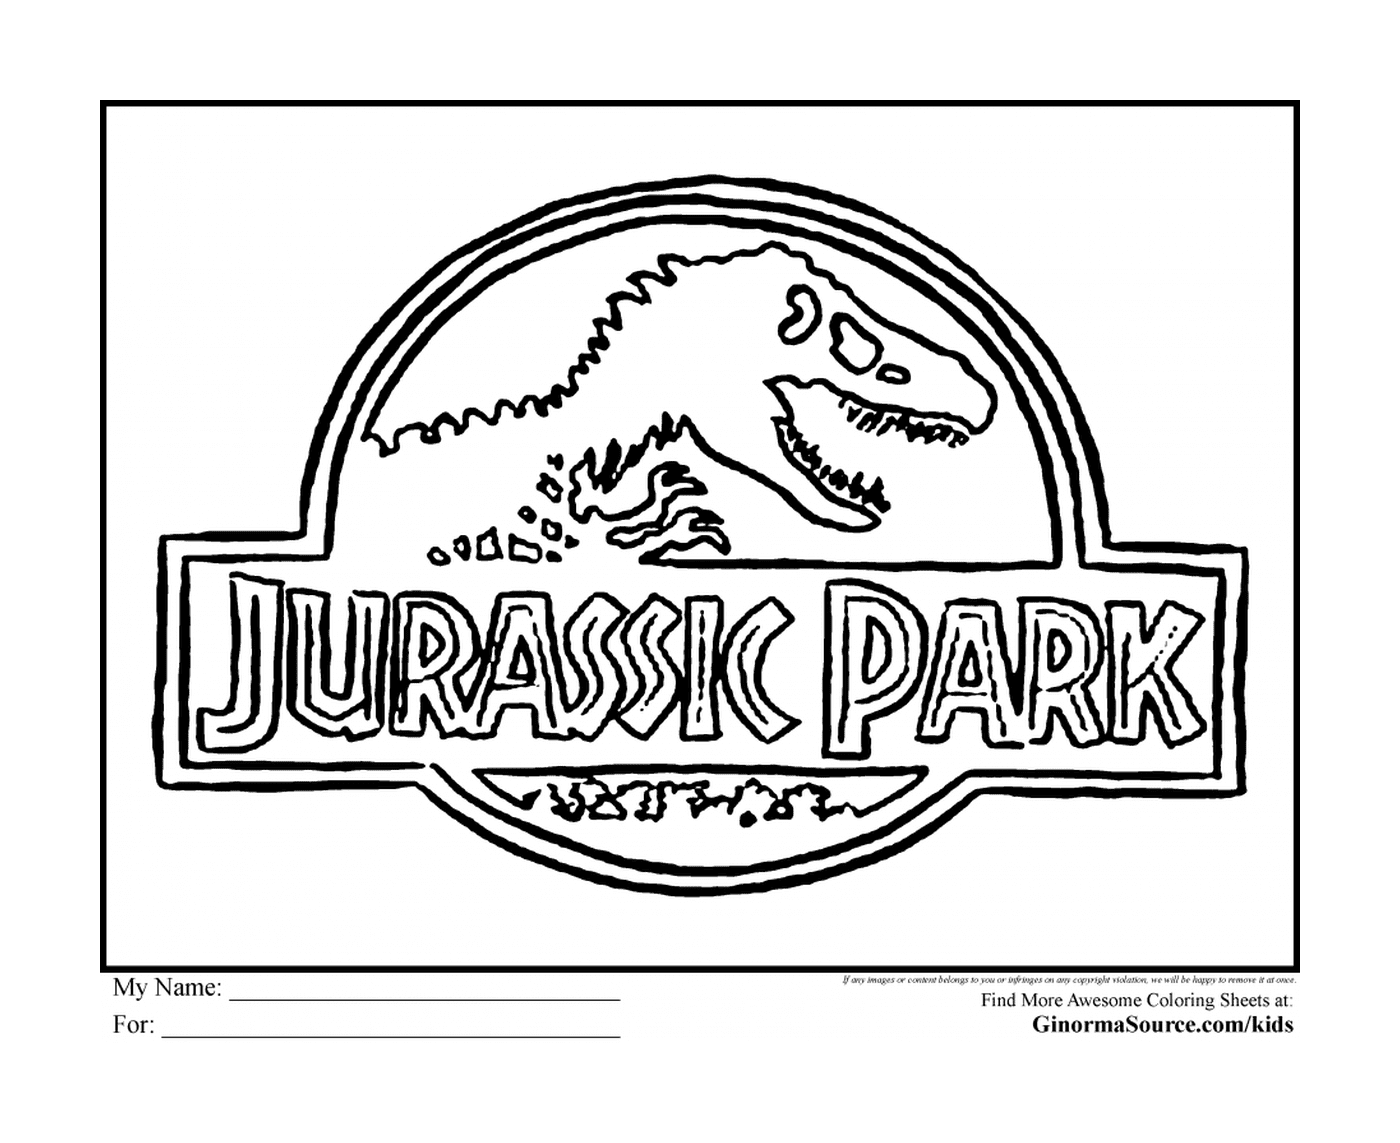   Logo Jurassic Park, symbole d'aventure 